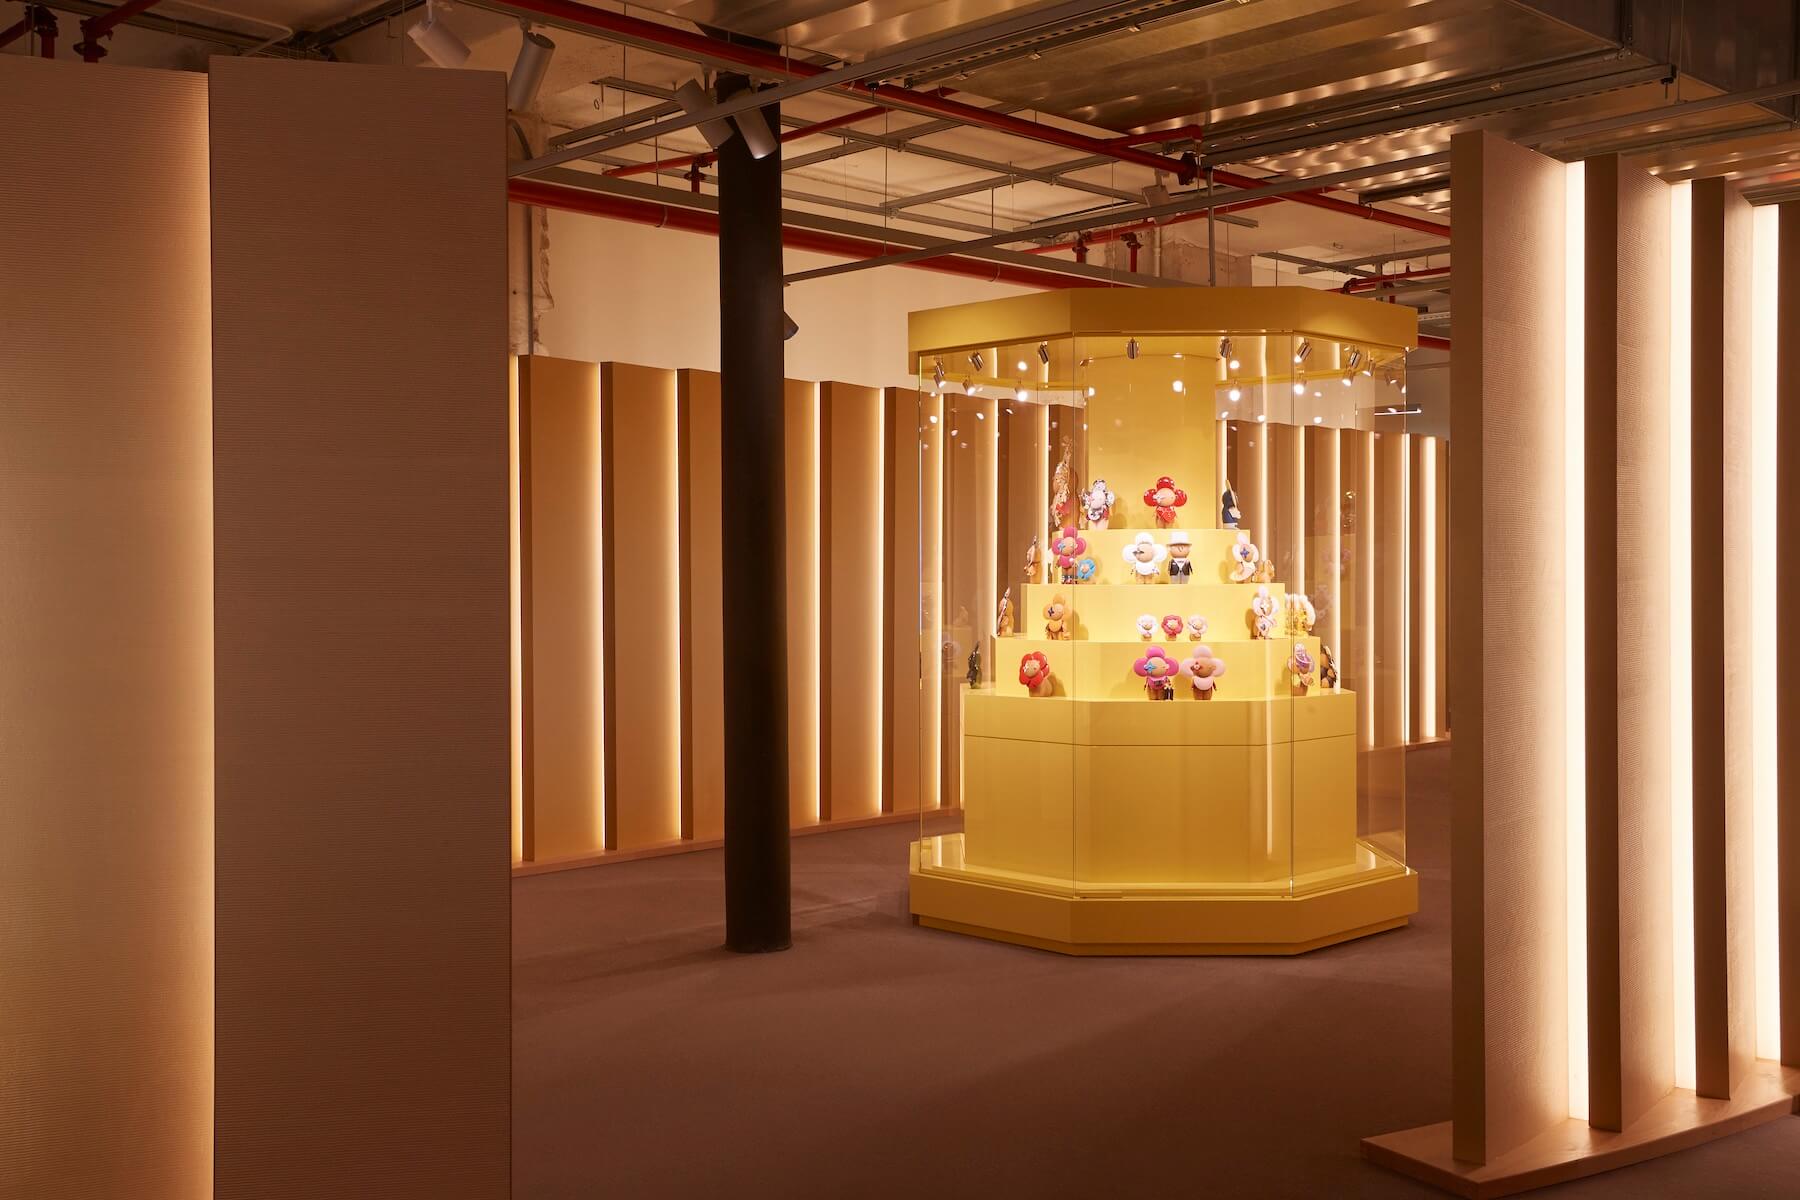 LV Dream - Exhibition explores the magical world of Louis Vuitton